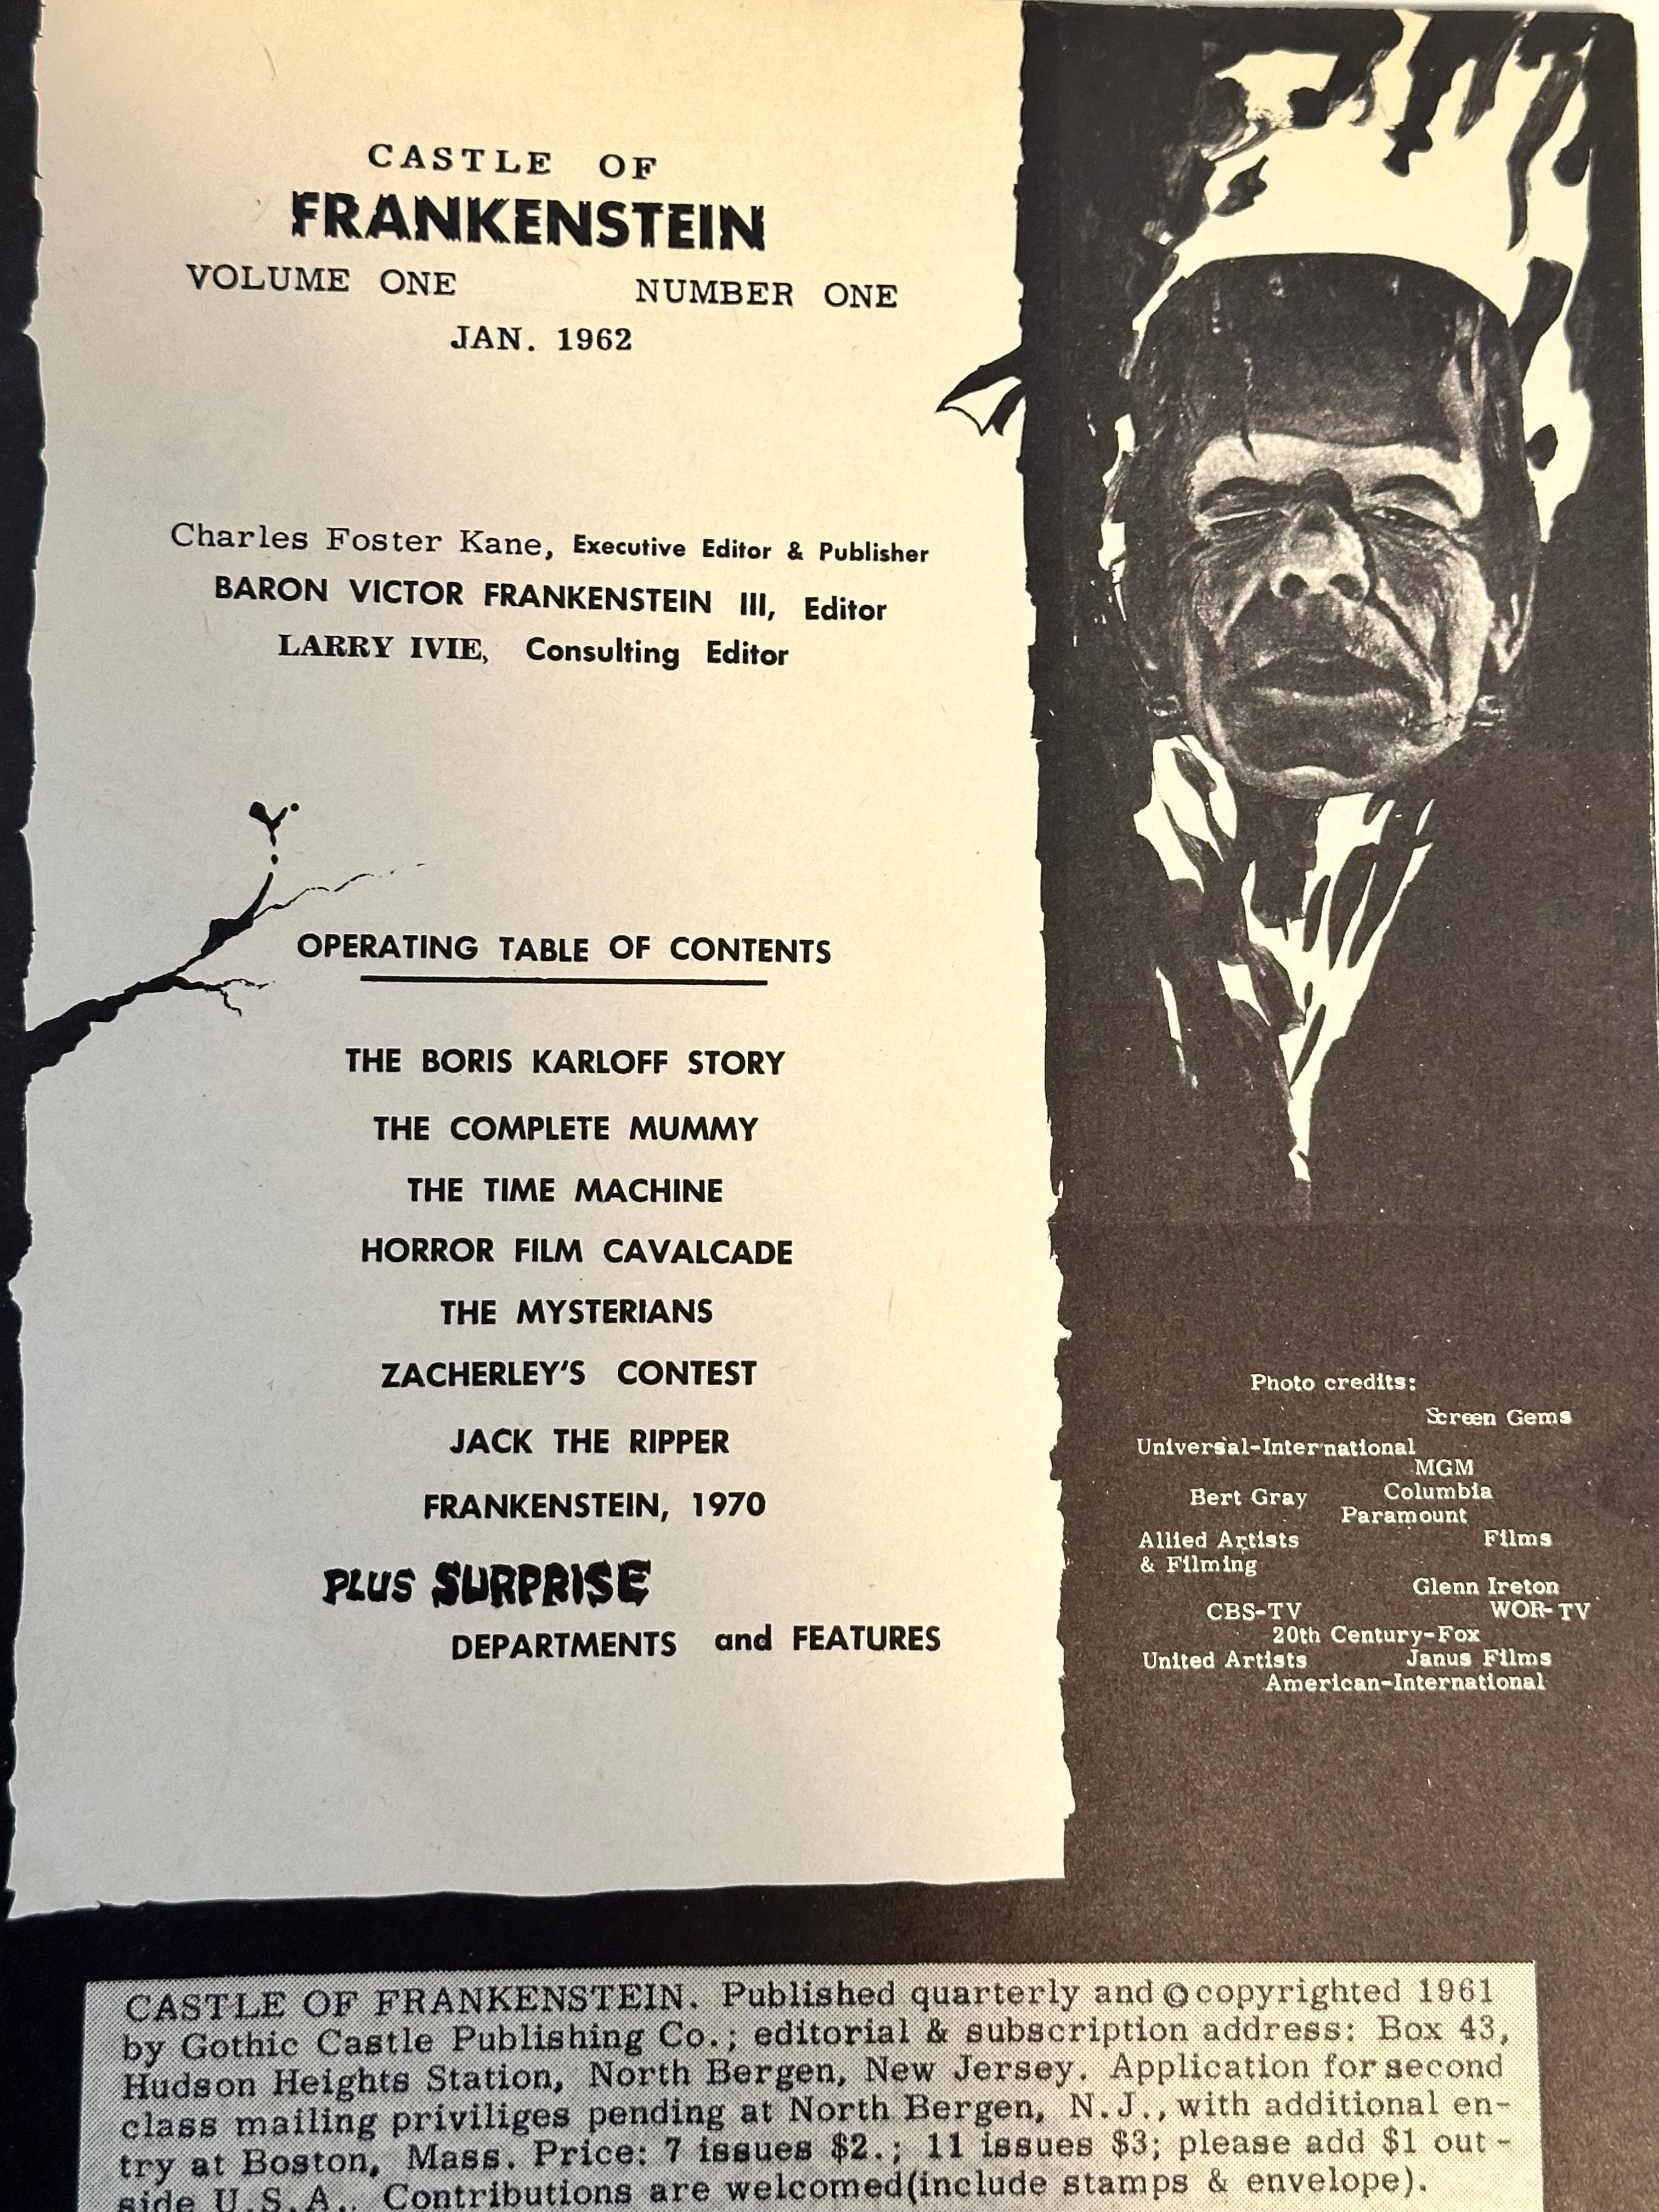 Castle of Frankenstein #1 rare high grade condition movie/TV magazine 1961